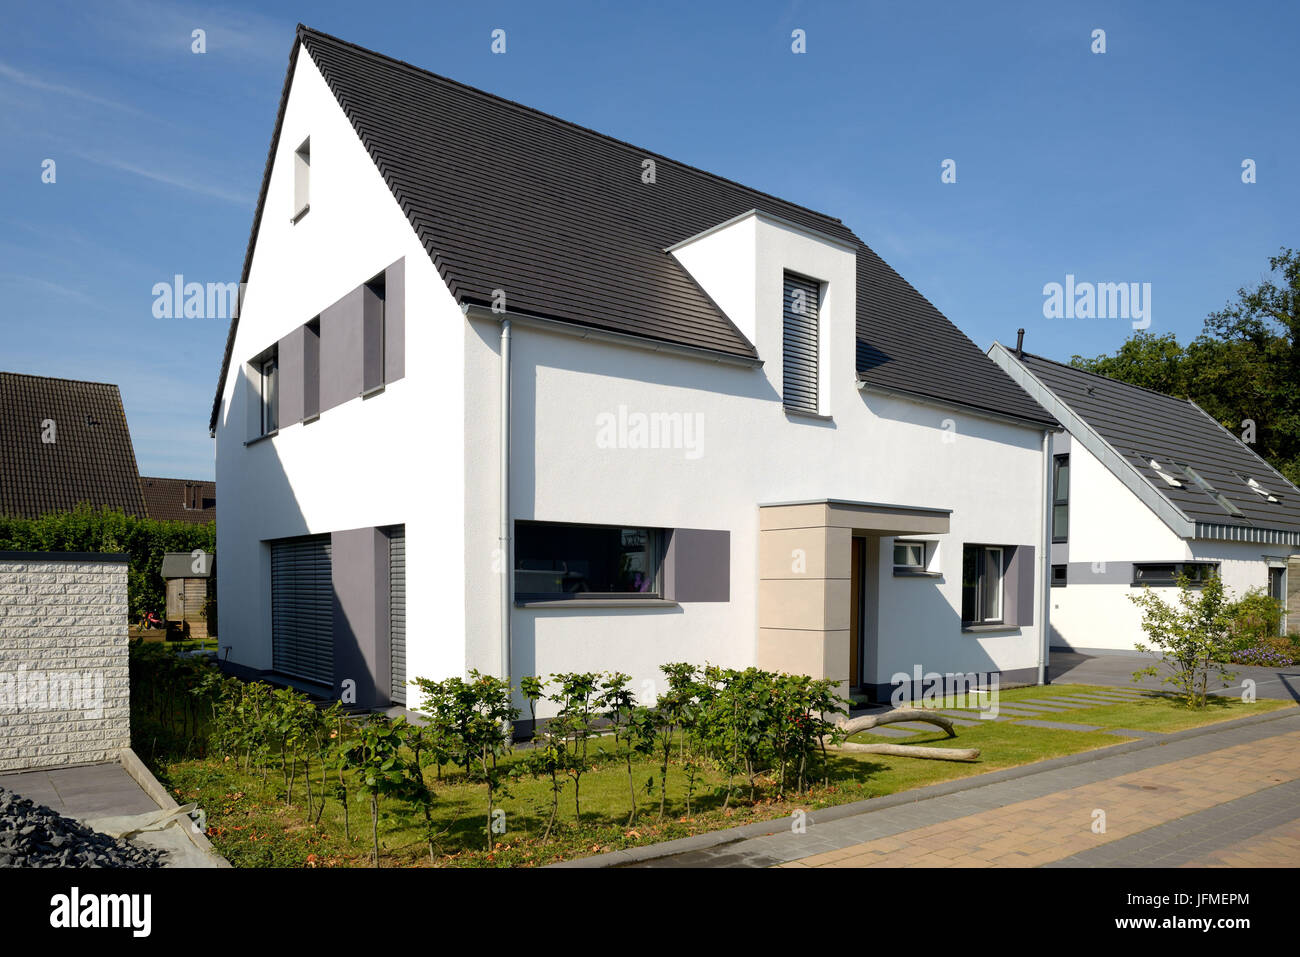 Single-family dwelling, dormer, gable roof Stock Photo